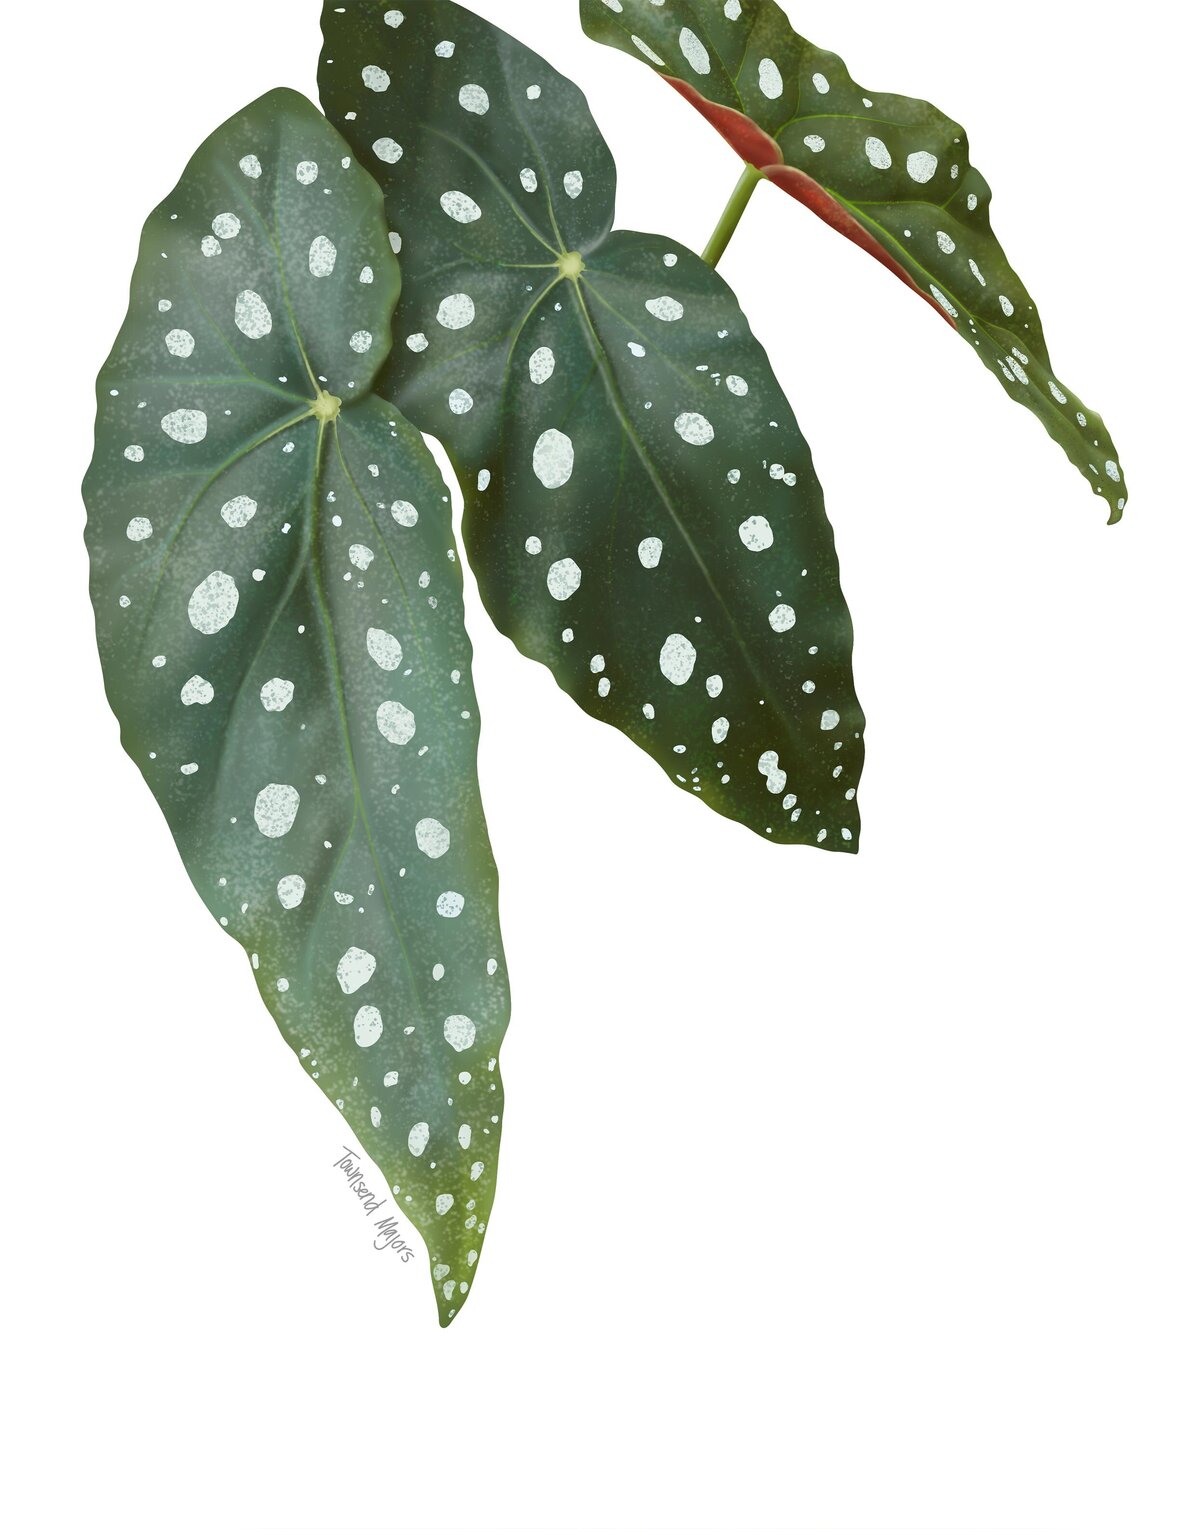 Townsend Majors' illustration of a polka dot begonia plant